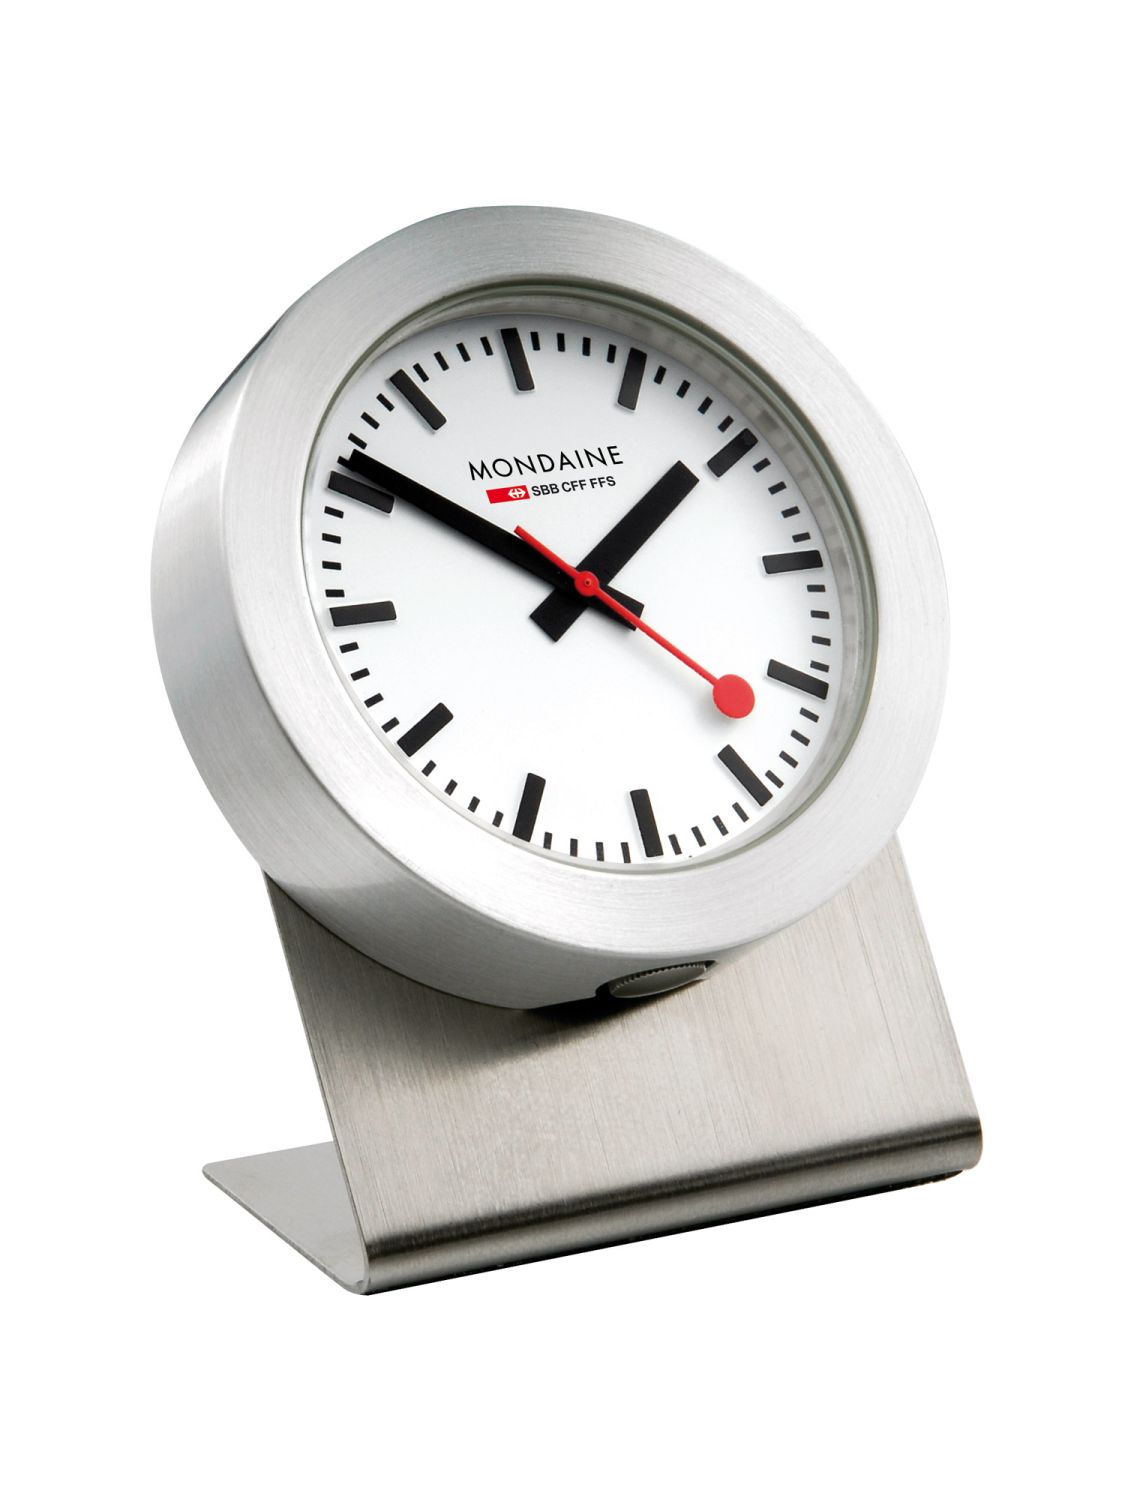 Mondaine Magnetic Table Clock Silver Tone A660.30318.81SBB • uhrcenter